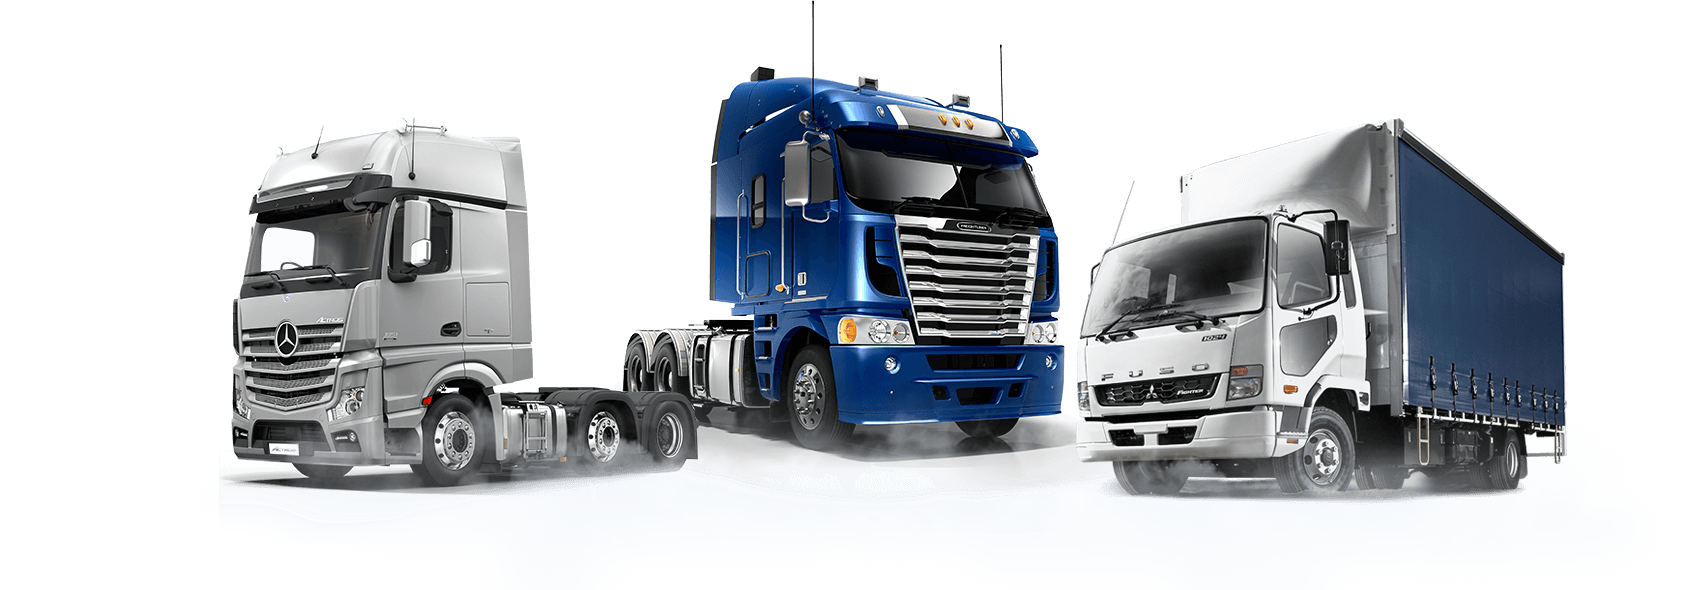 Daimler Bus Logo - Daimler Truck And Bus Australia. Mercedes Benz, Fuso And Freightliner